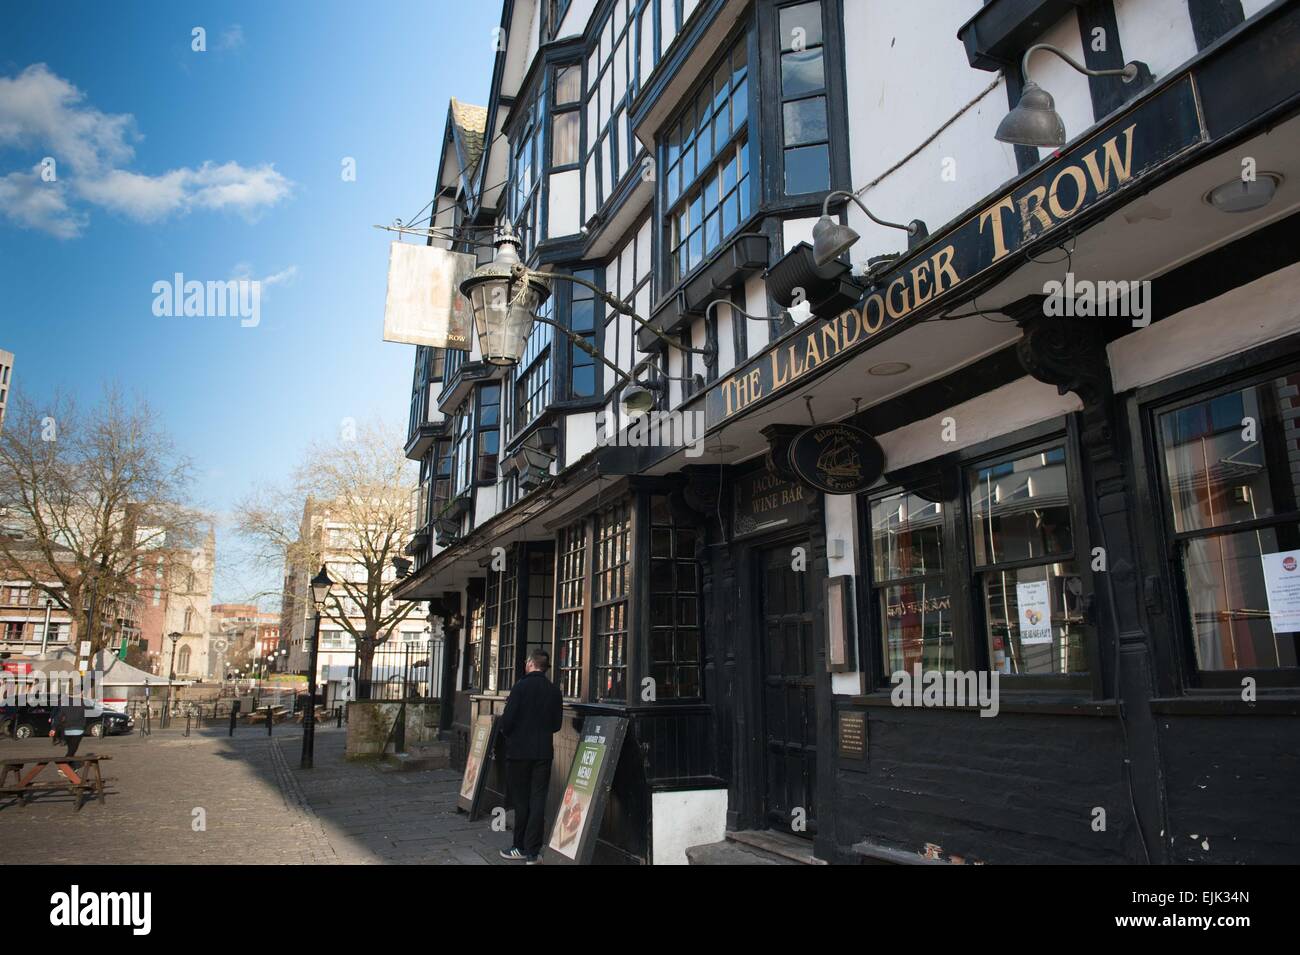 The exterior of the Llandoger Trow pub in Bristol city centre Stock Photo